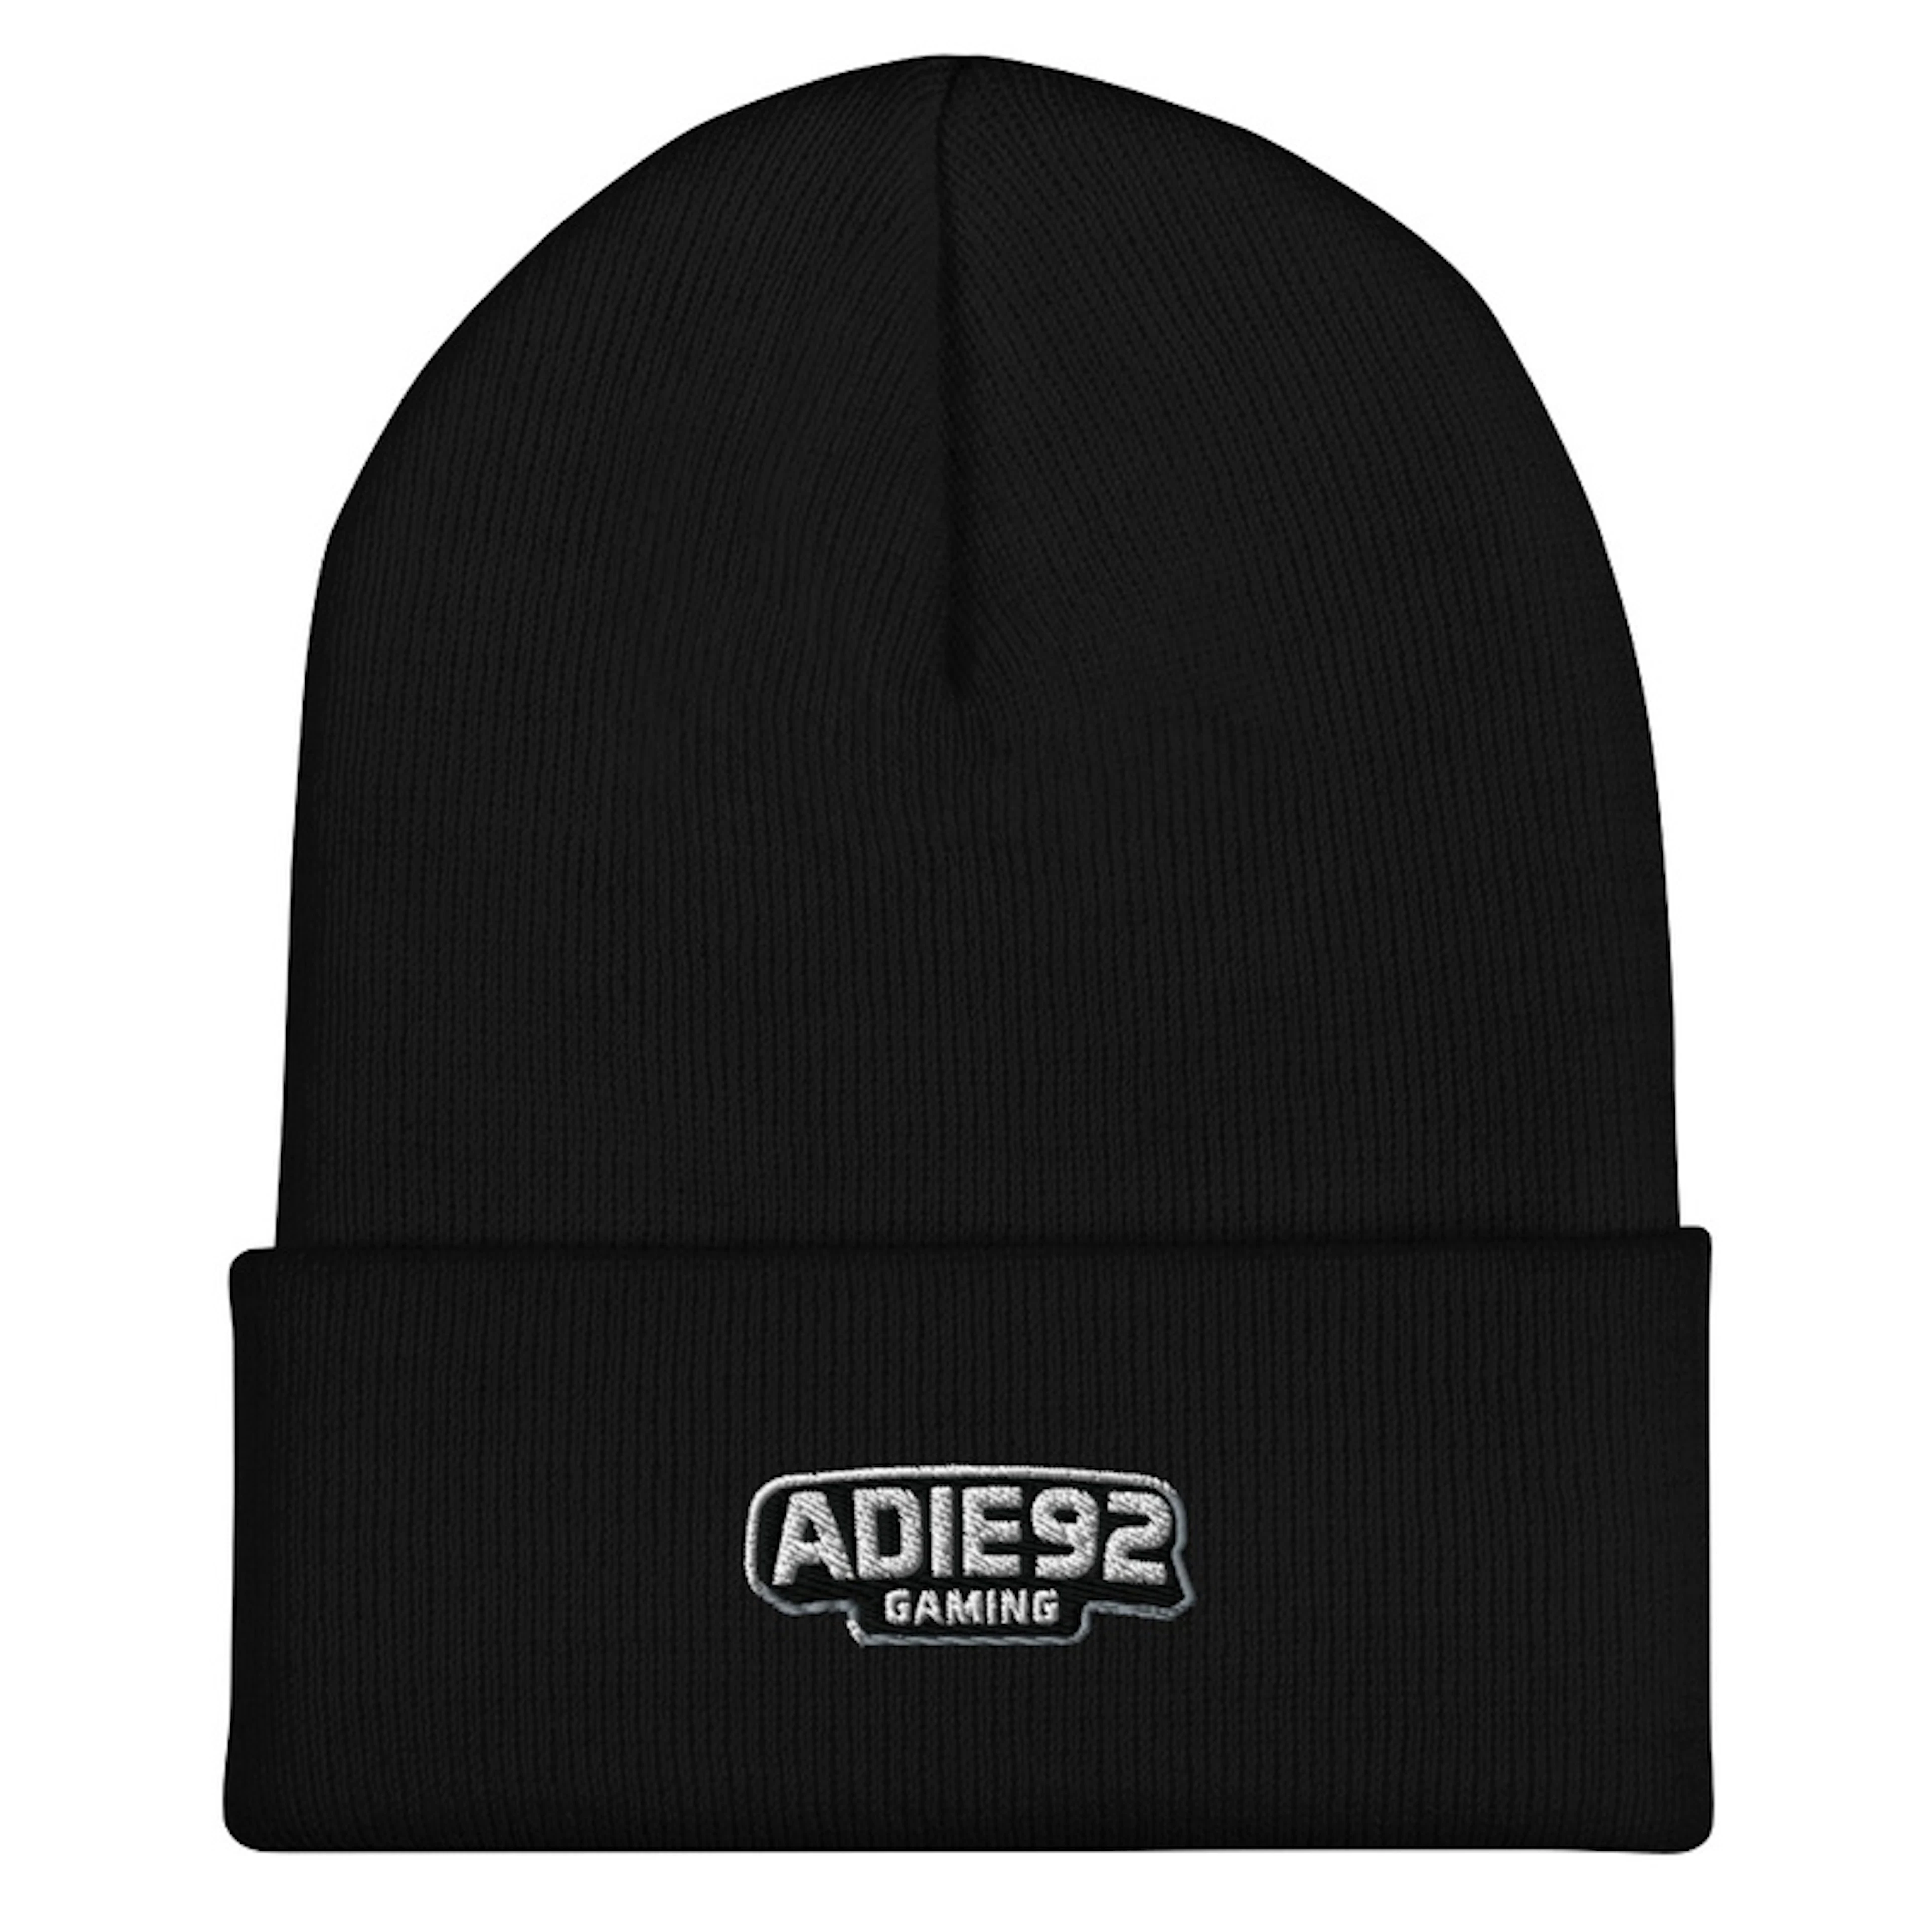 Adie92 Beanie Hat